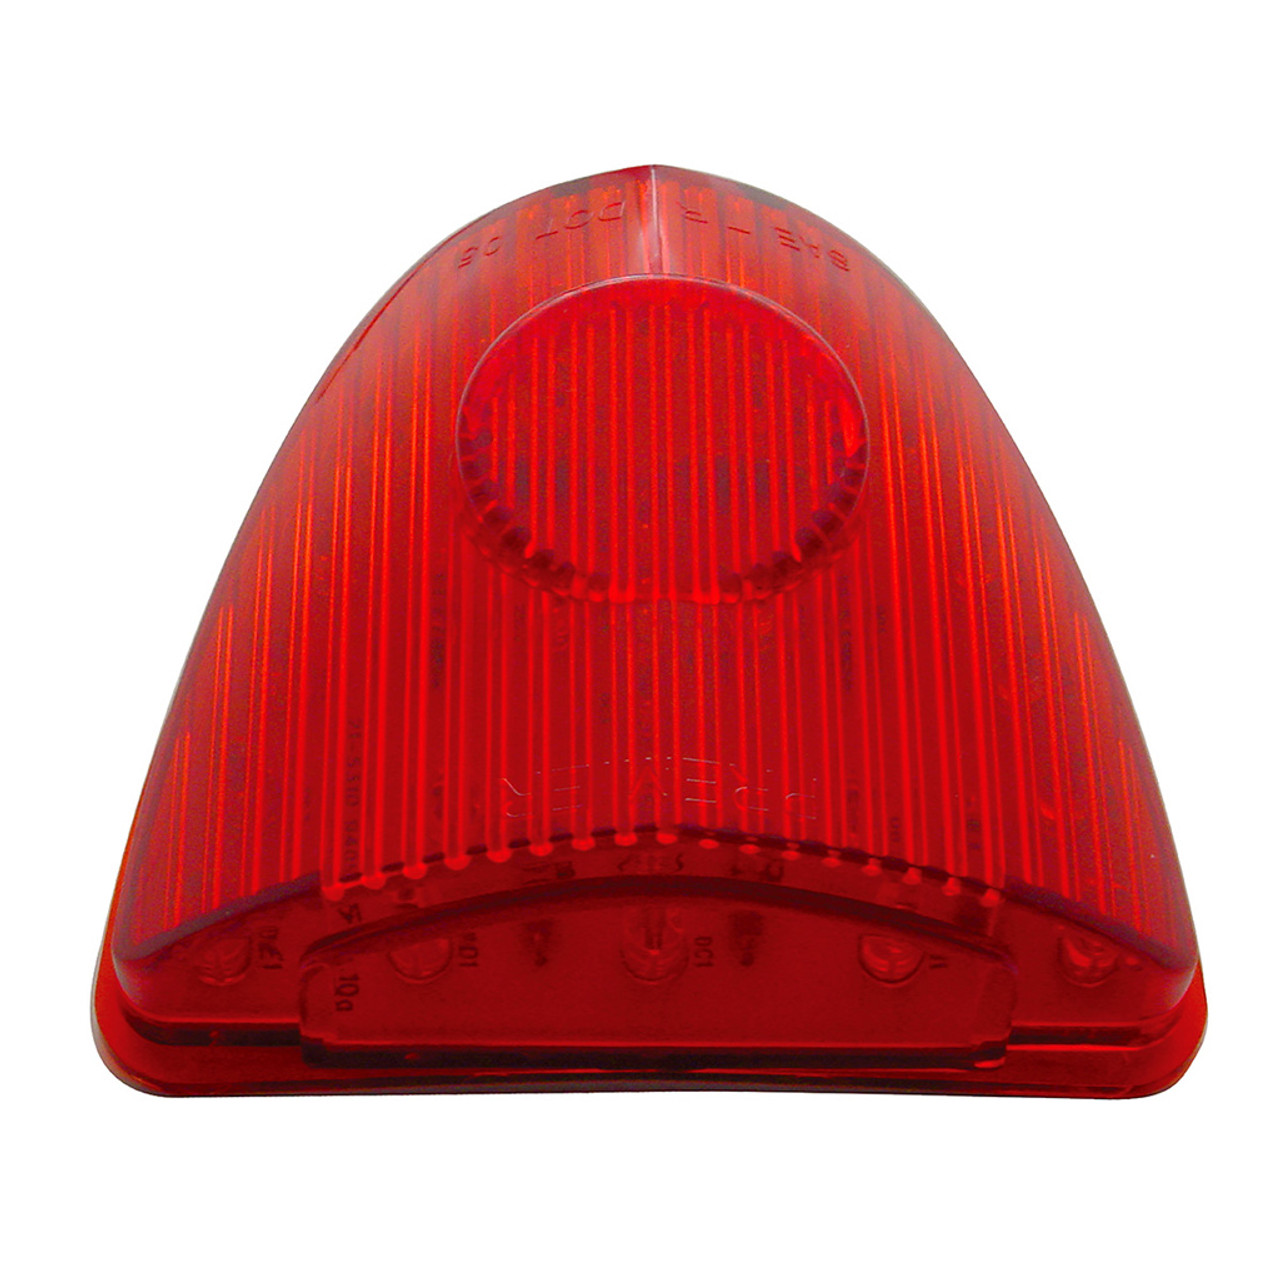 1953 Chevy Car Tail Light 26 LED Red Lens Upper